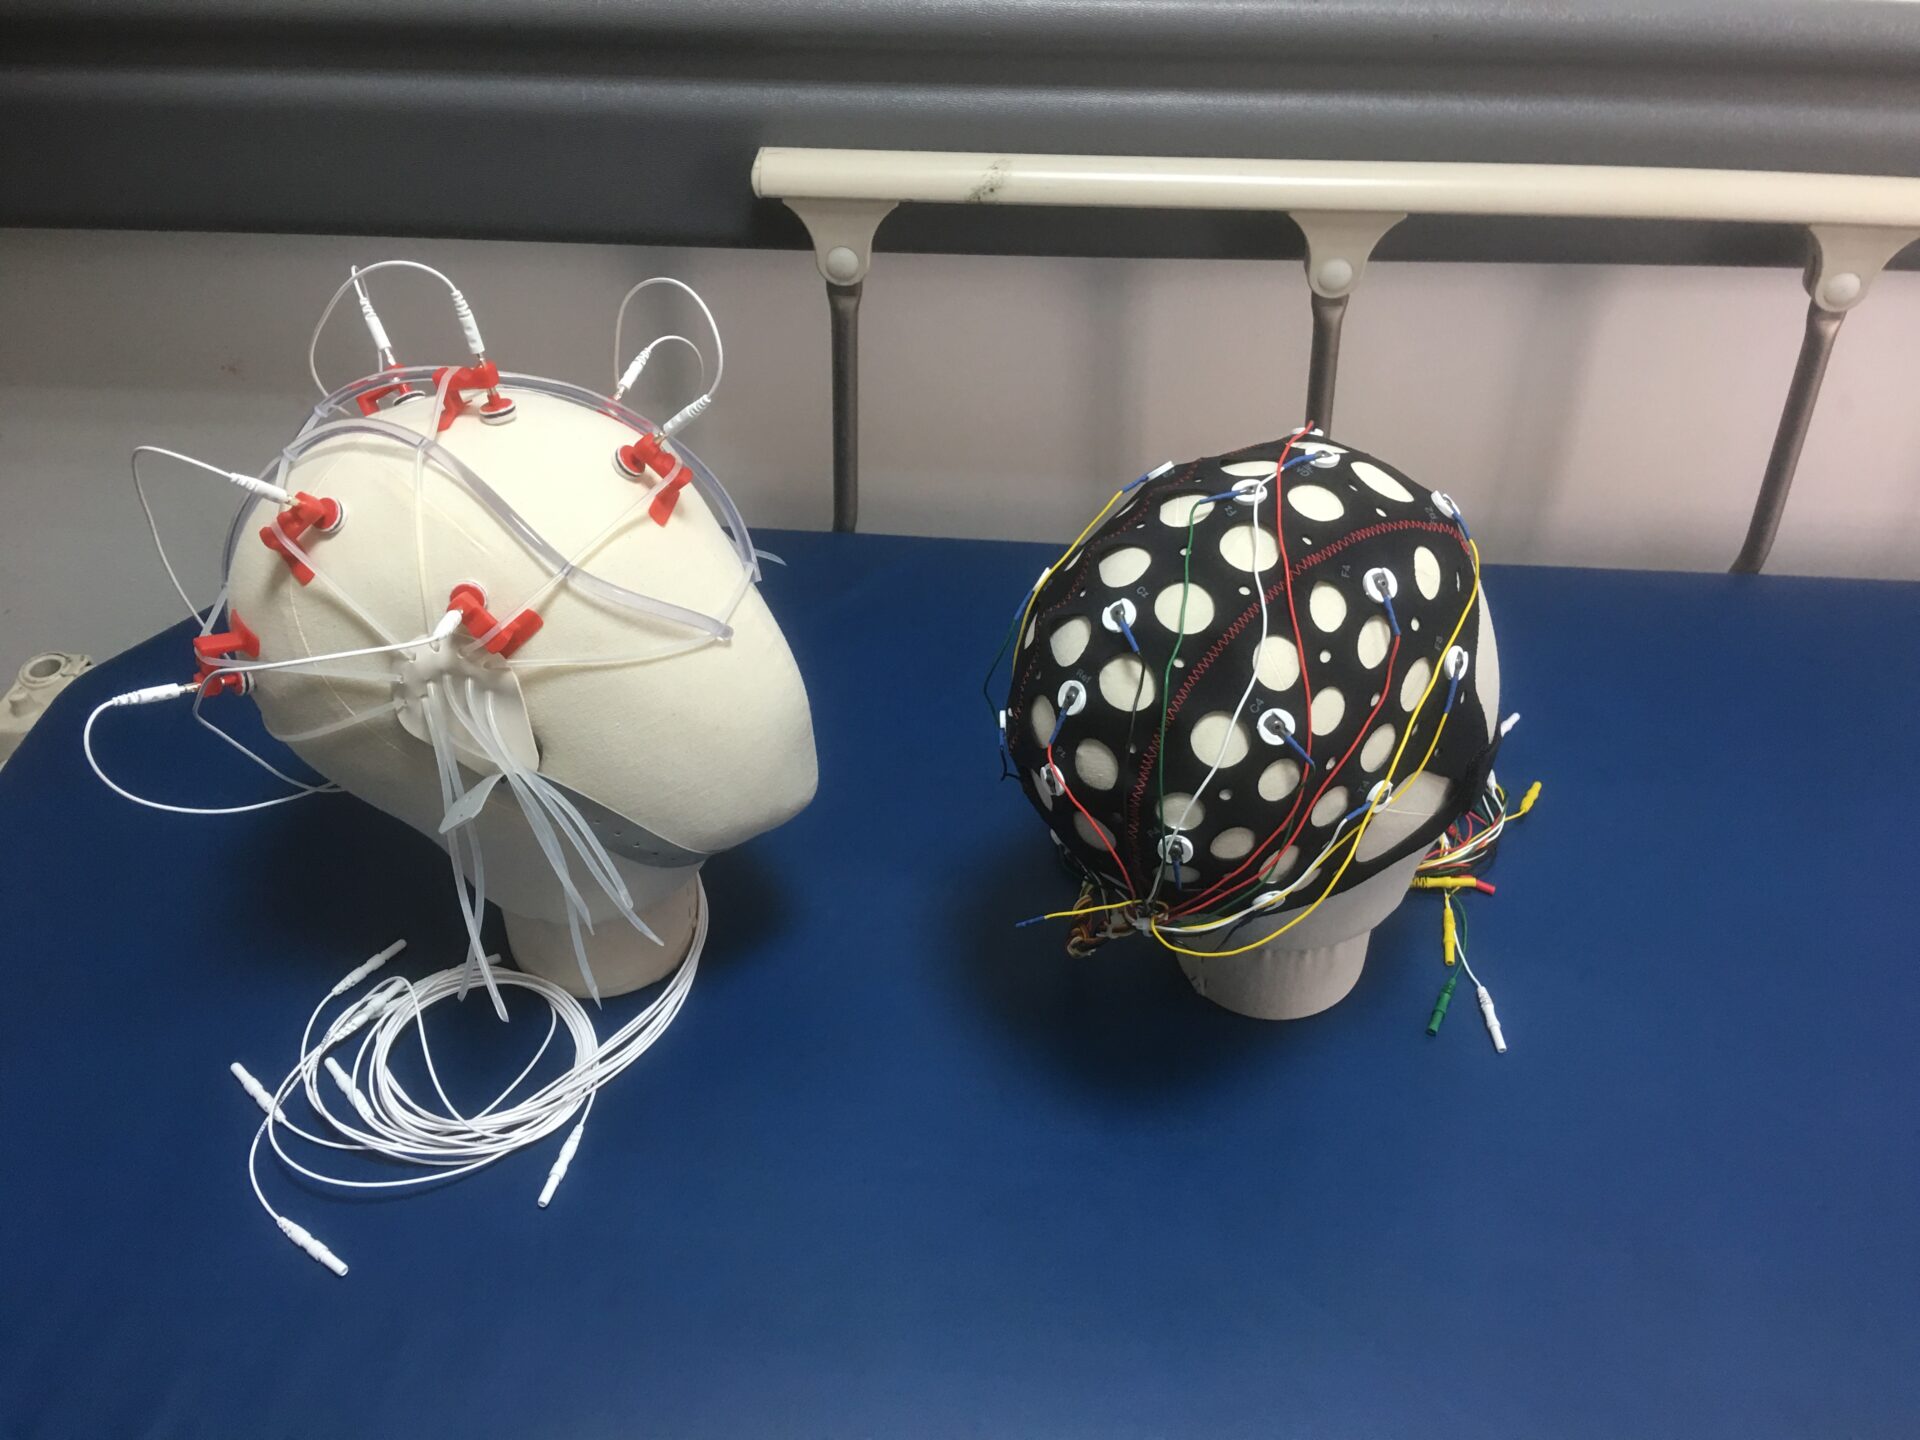 EEG Caps